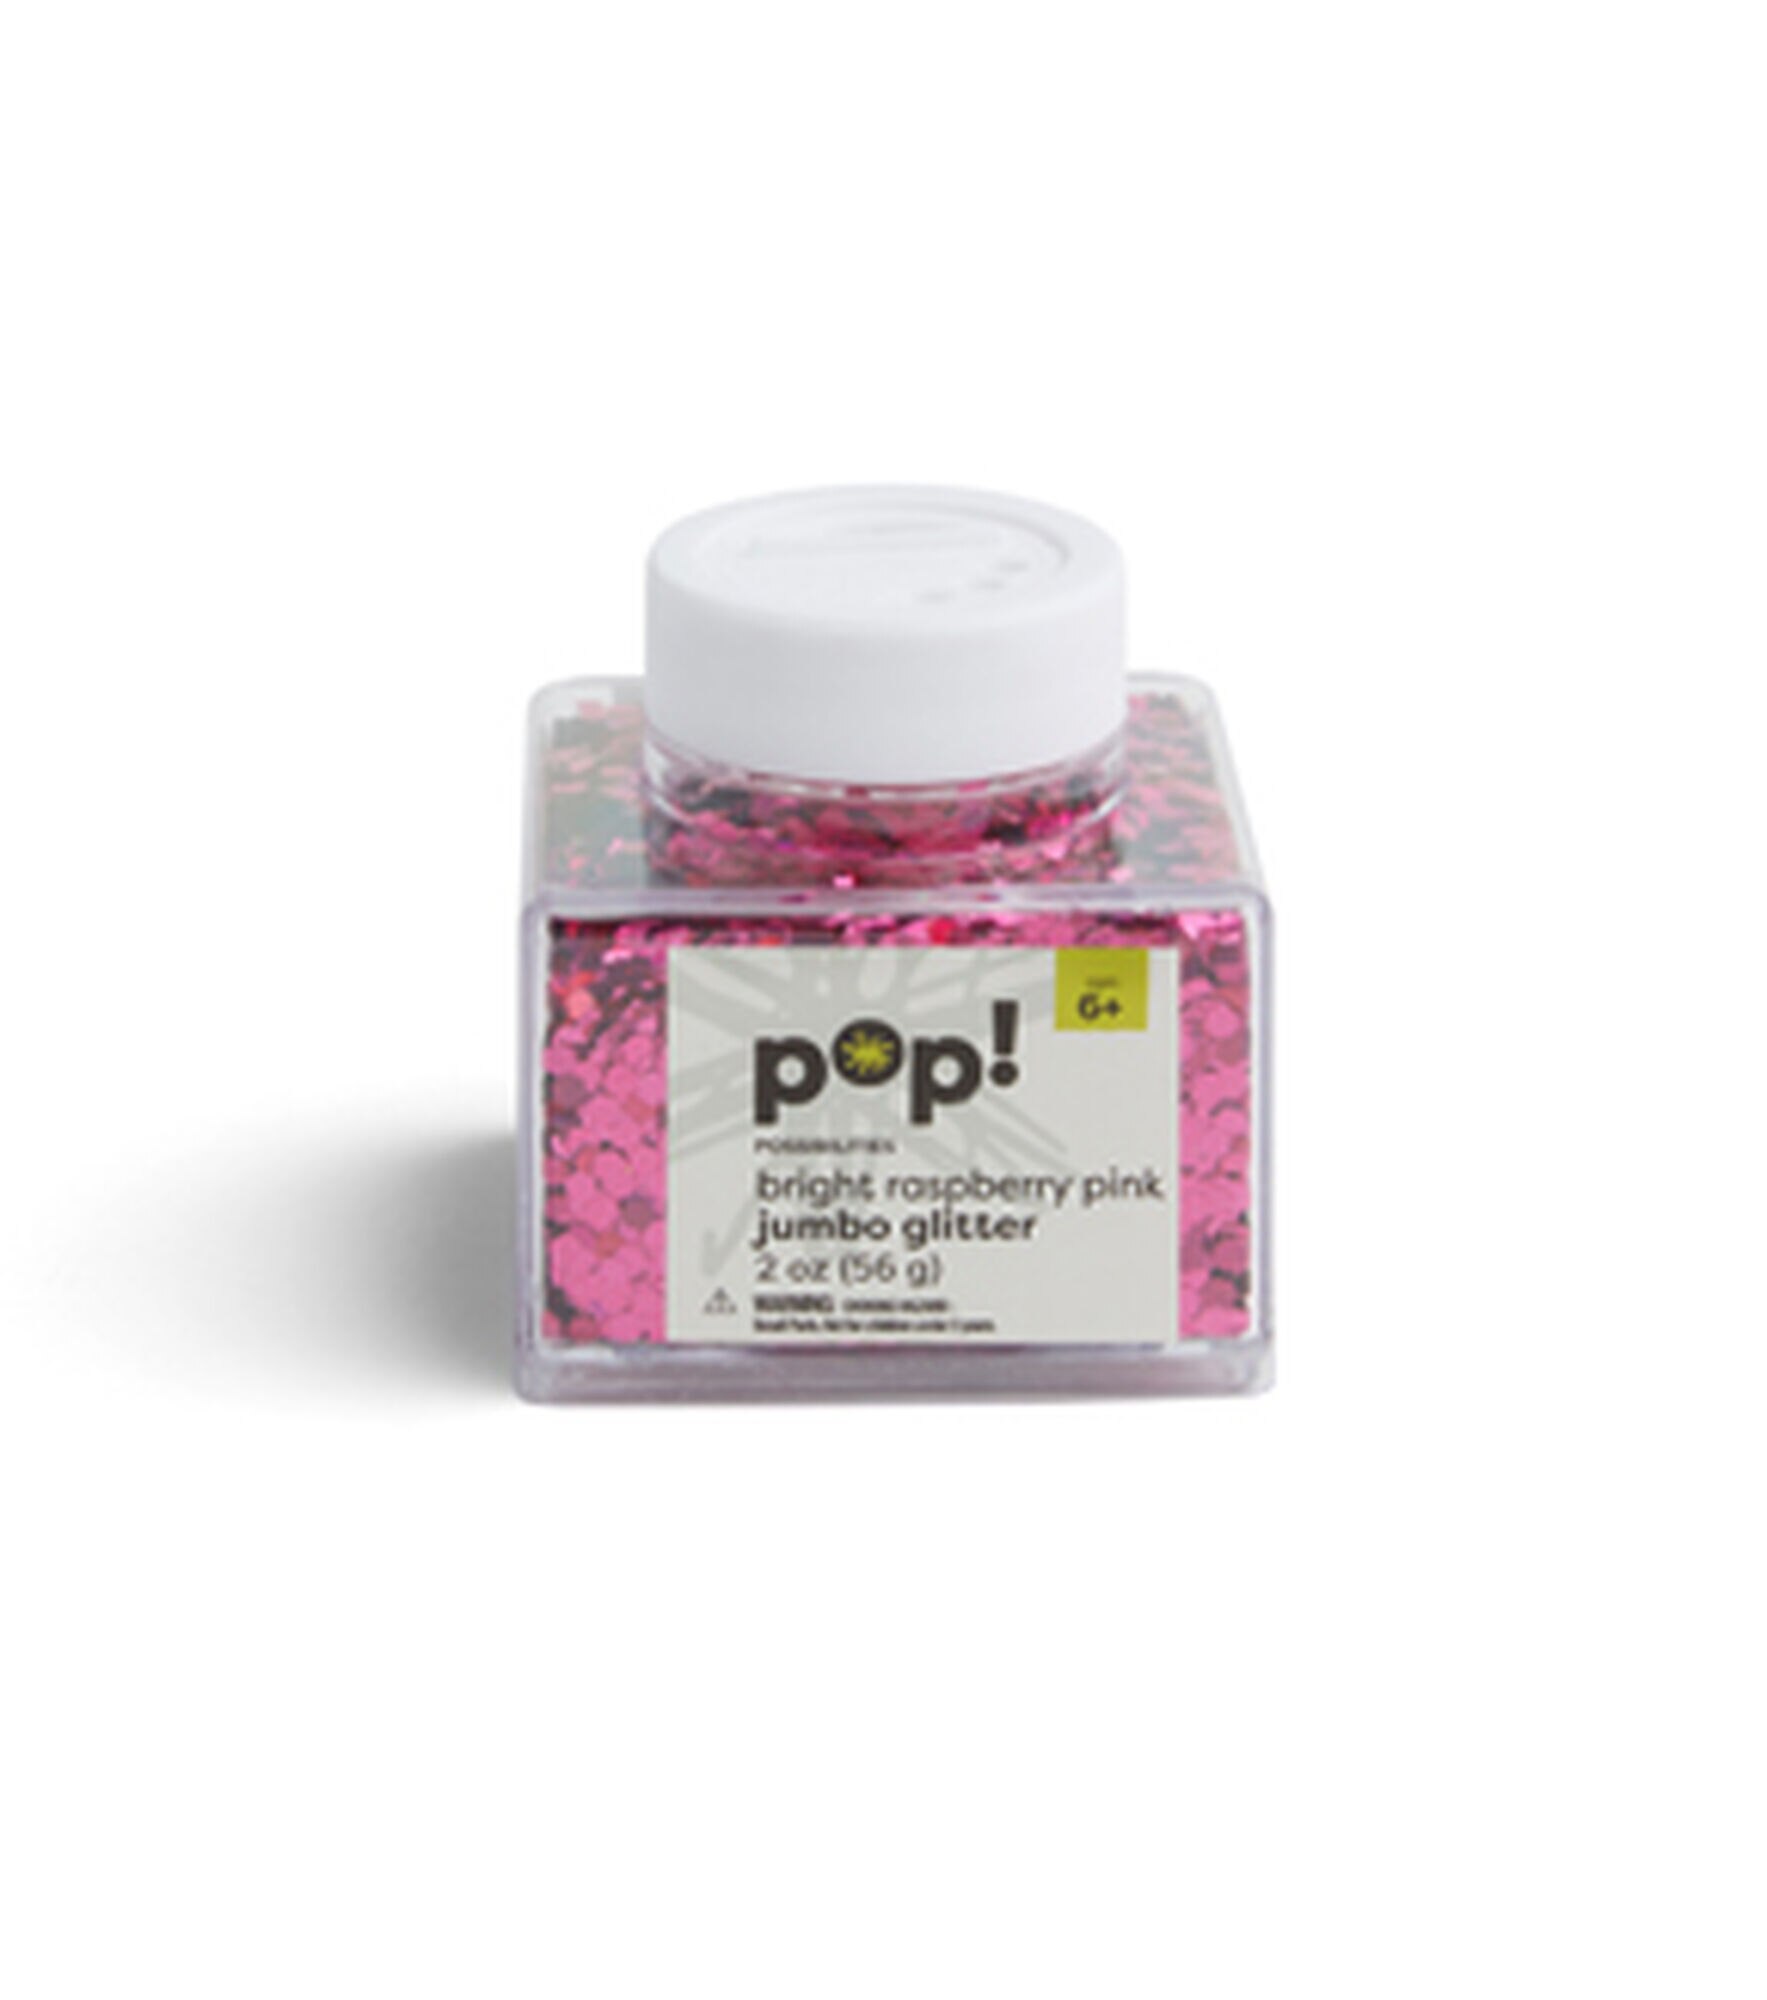 POP! Glitter Stacker Jumbo  Holographic 2oz, Bright Raspberry Pink, hi-res